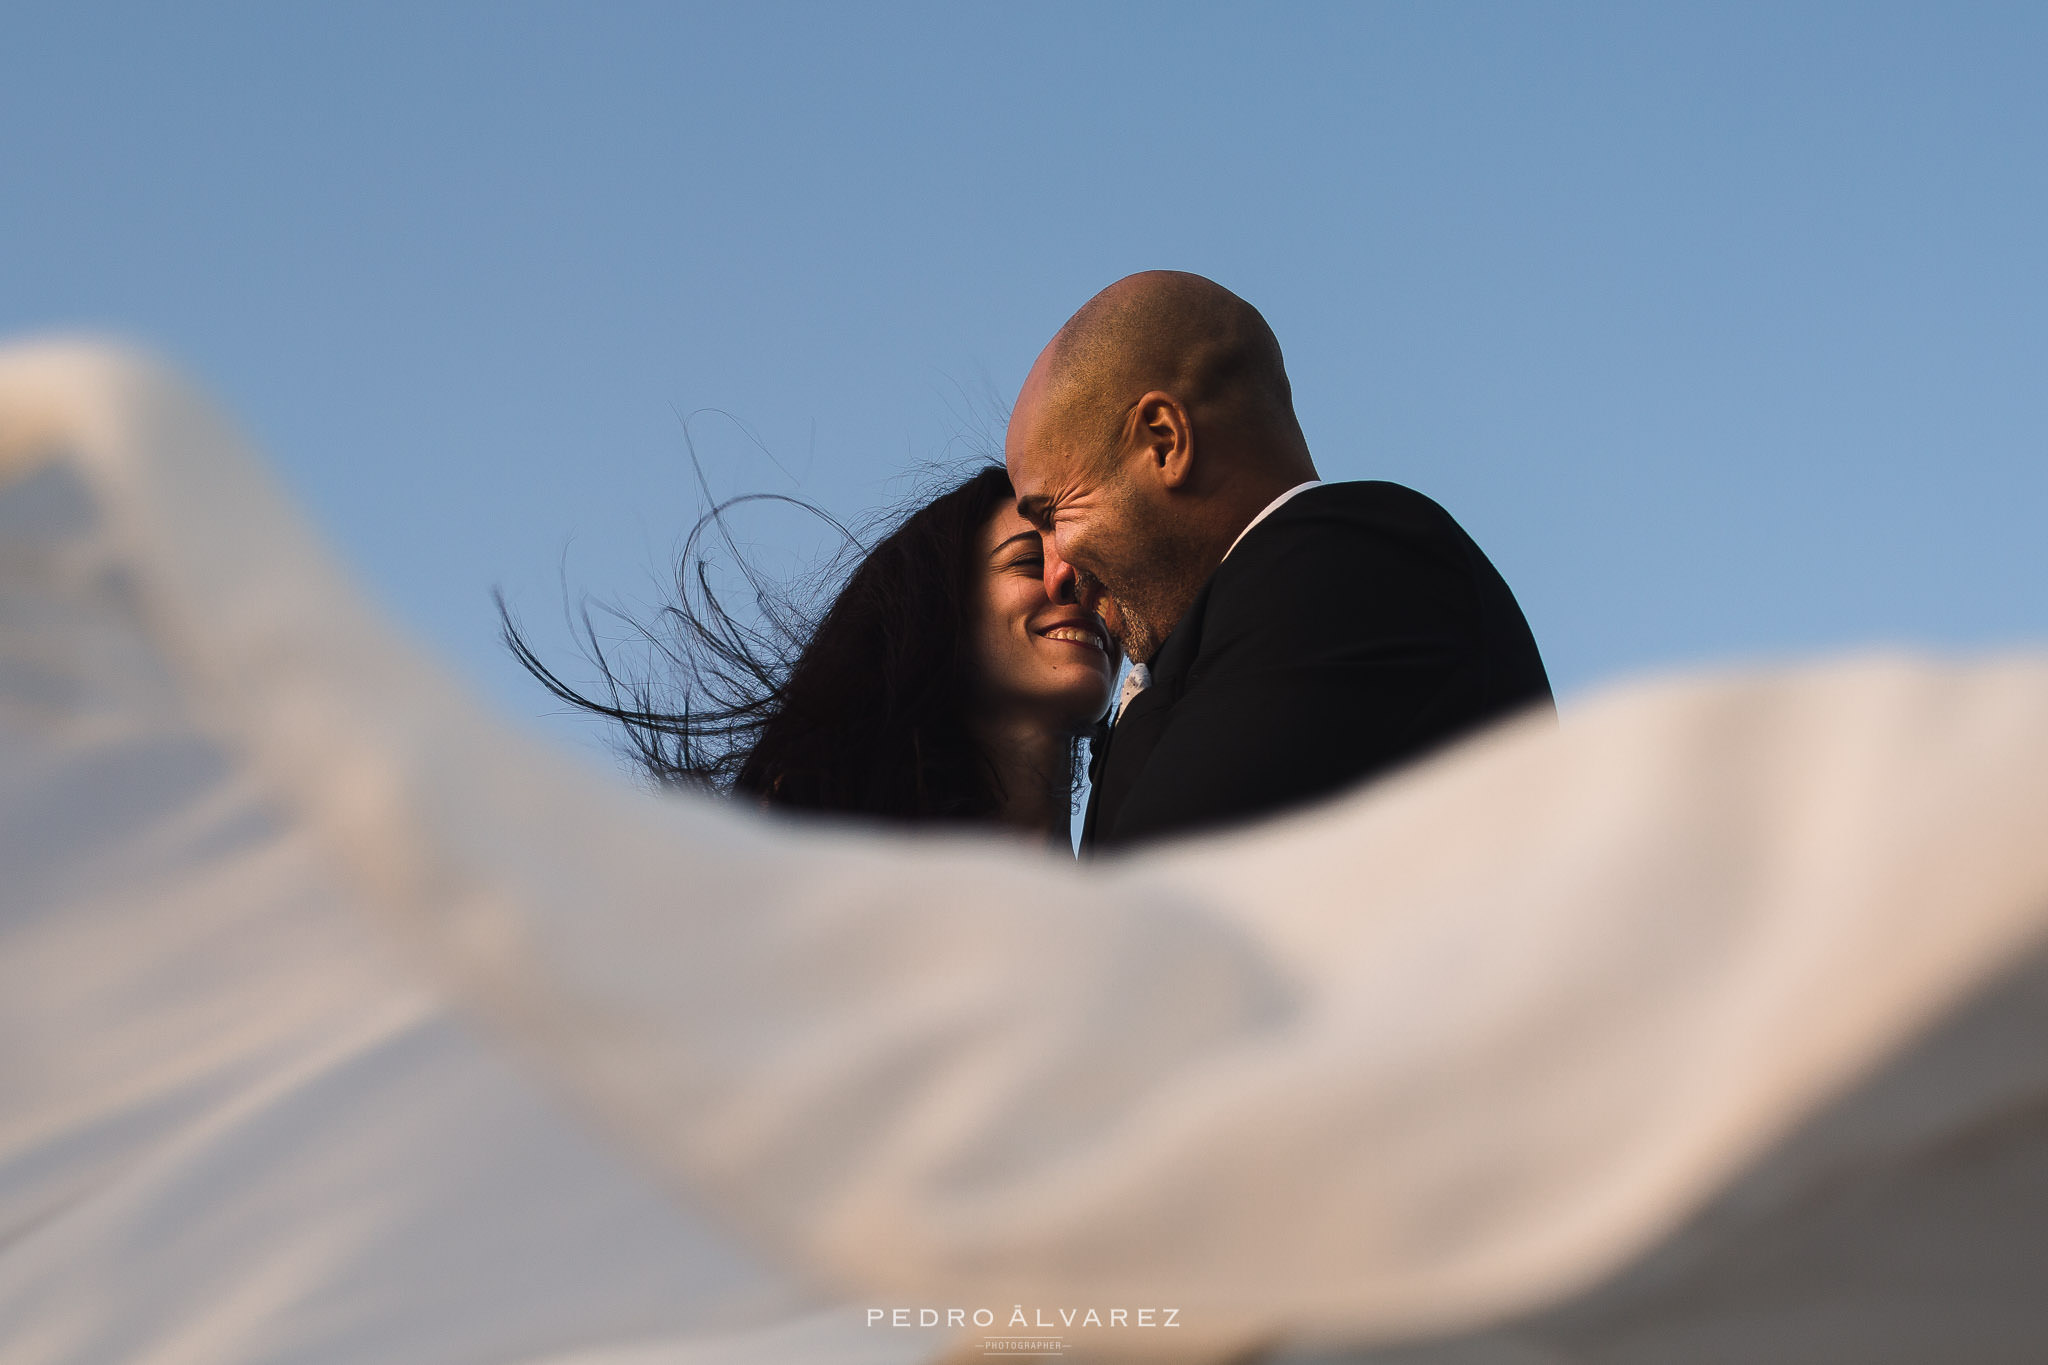 Fotografos de bodas en Canarias Las Palmas de Gran Canaria